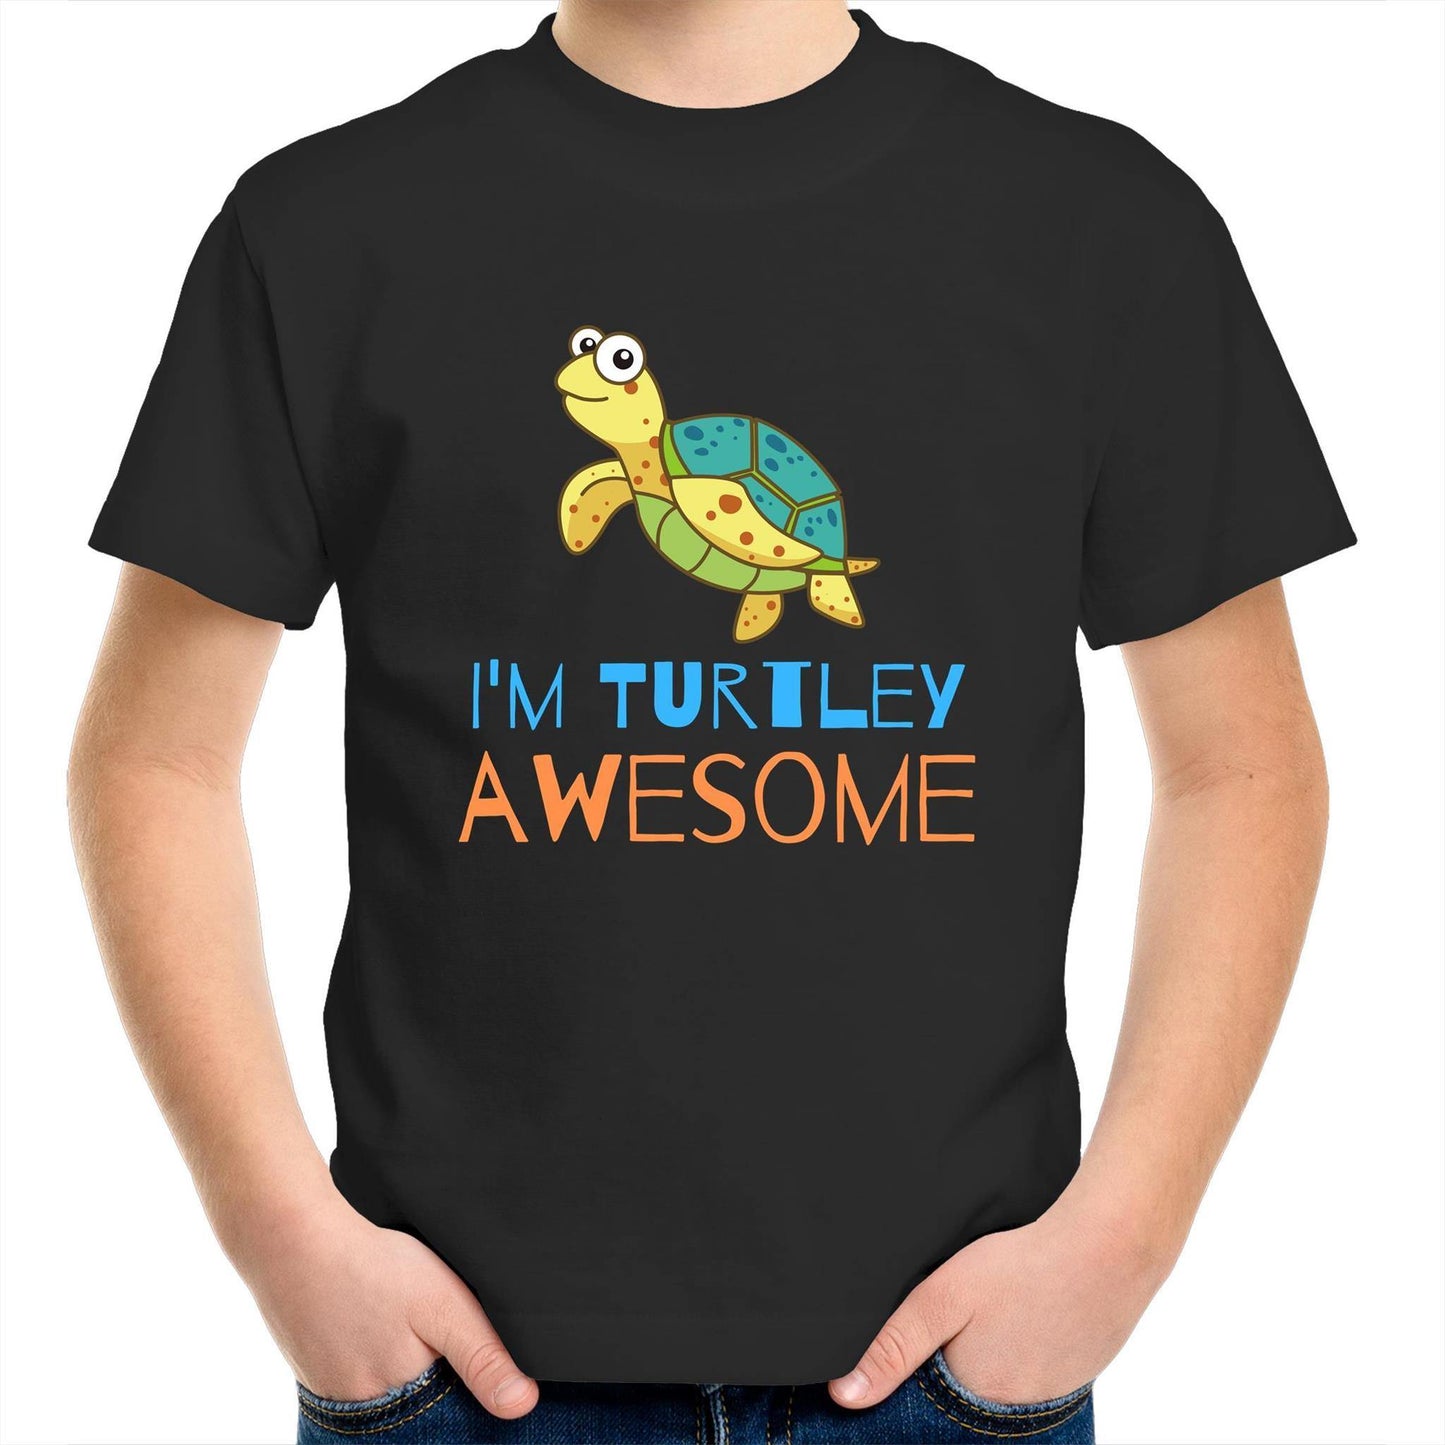 I'm Turtley Awesome - Kids Youth Crew T-Shirt Black Kids Youth T-shirt animal